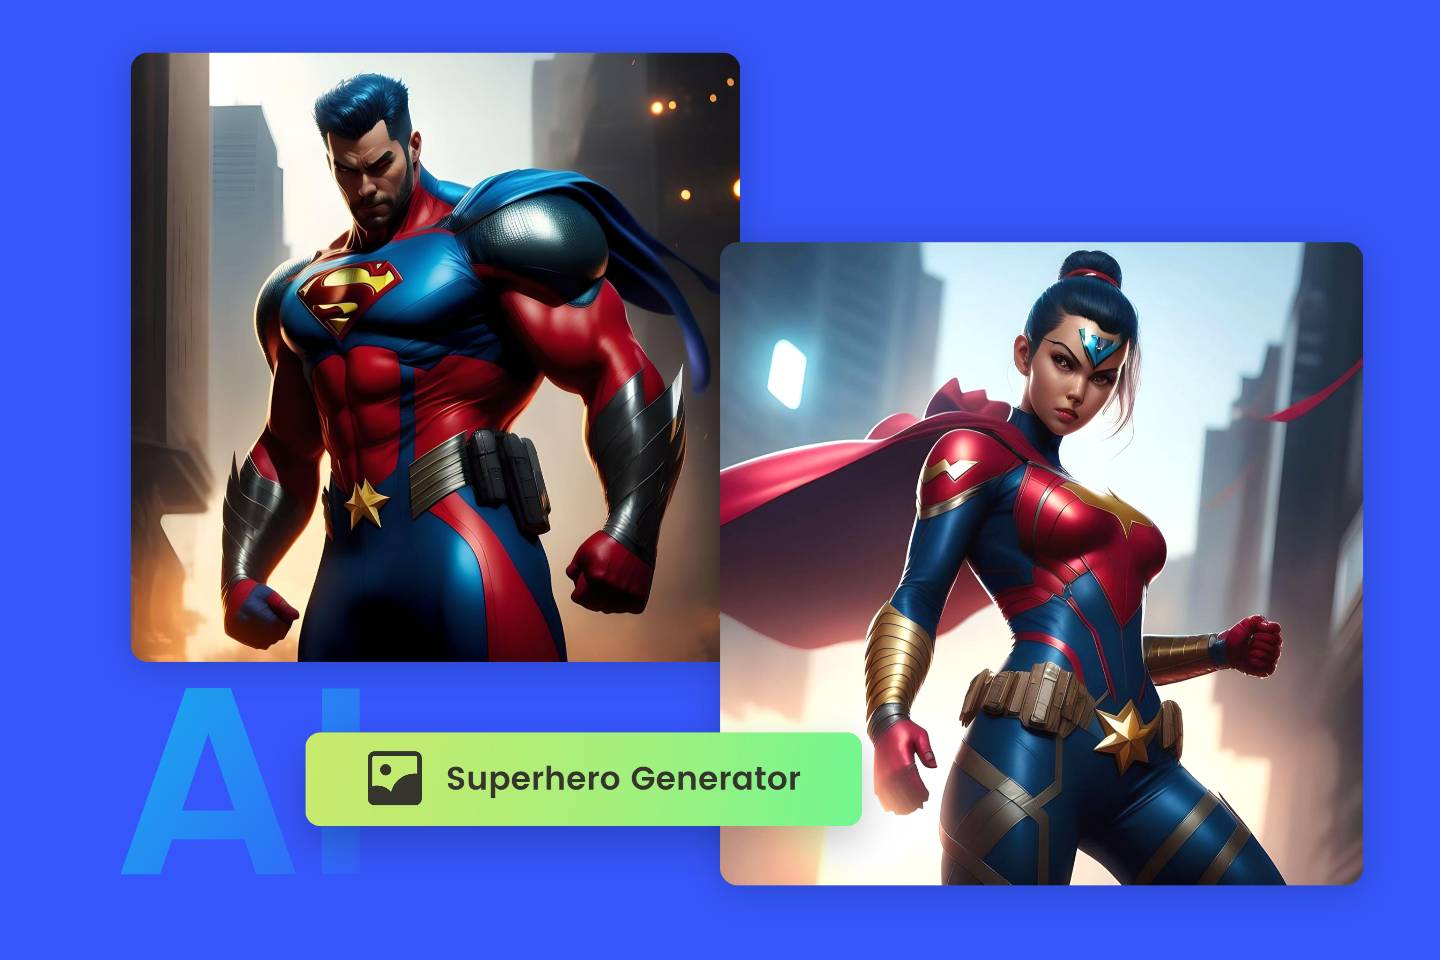 Create your own superhero online easily with Fotor's AI superhero generator